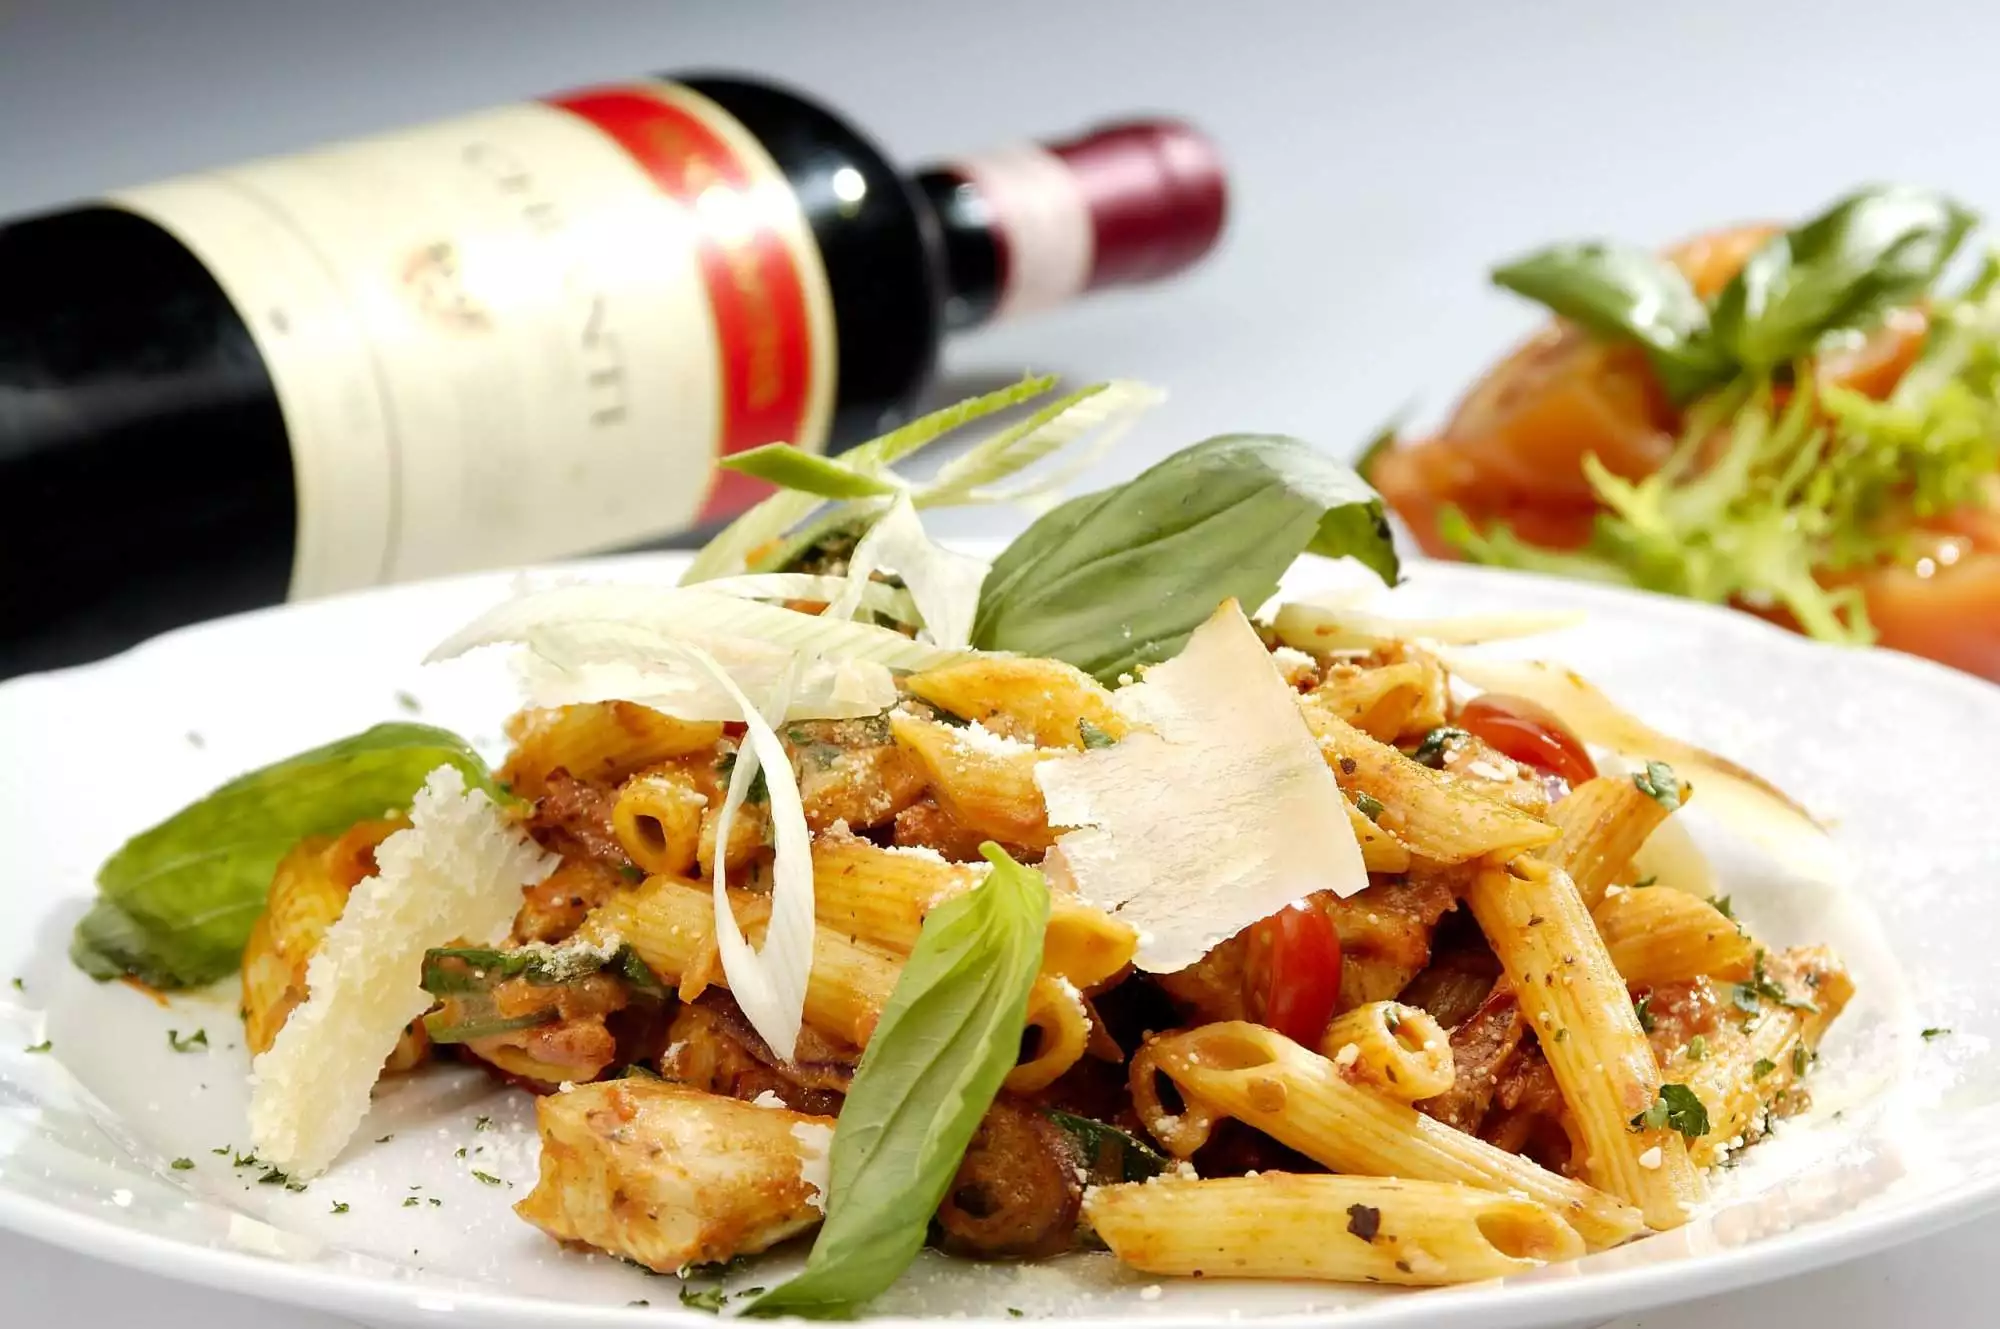 16 Best Italian Restaurants Toronto For An Ideal Cuisine 2